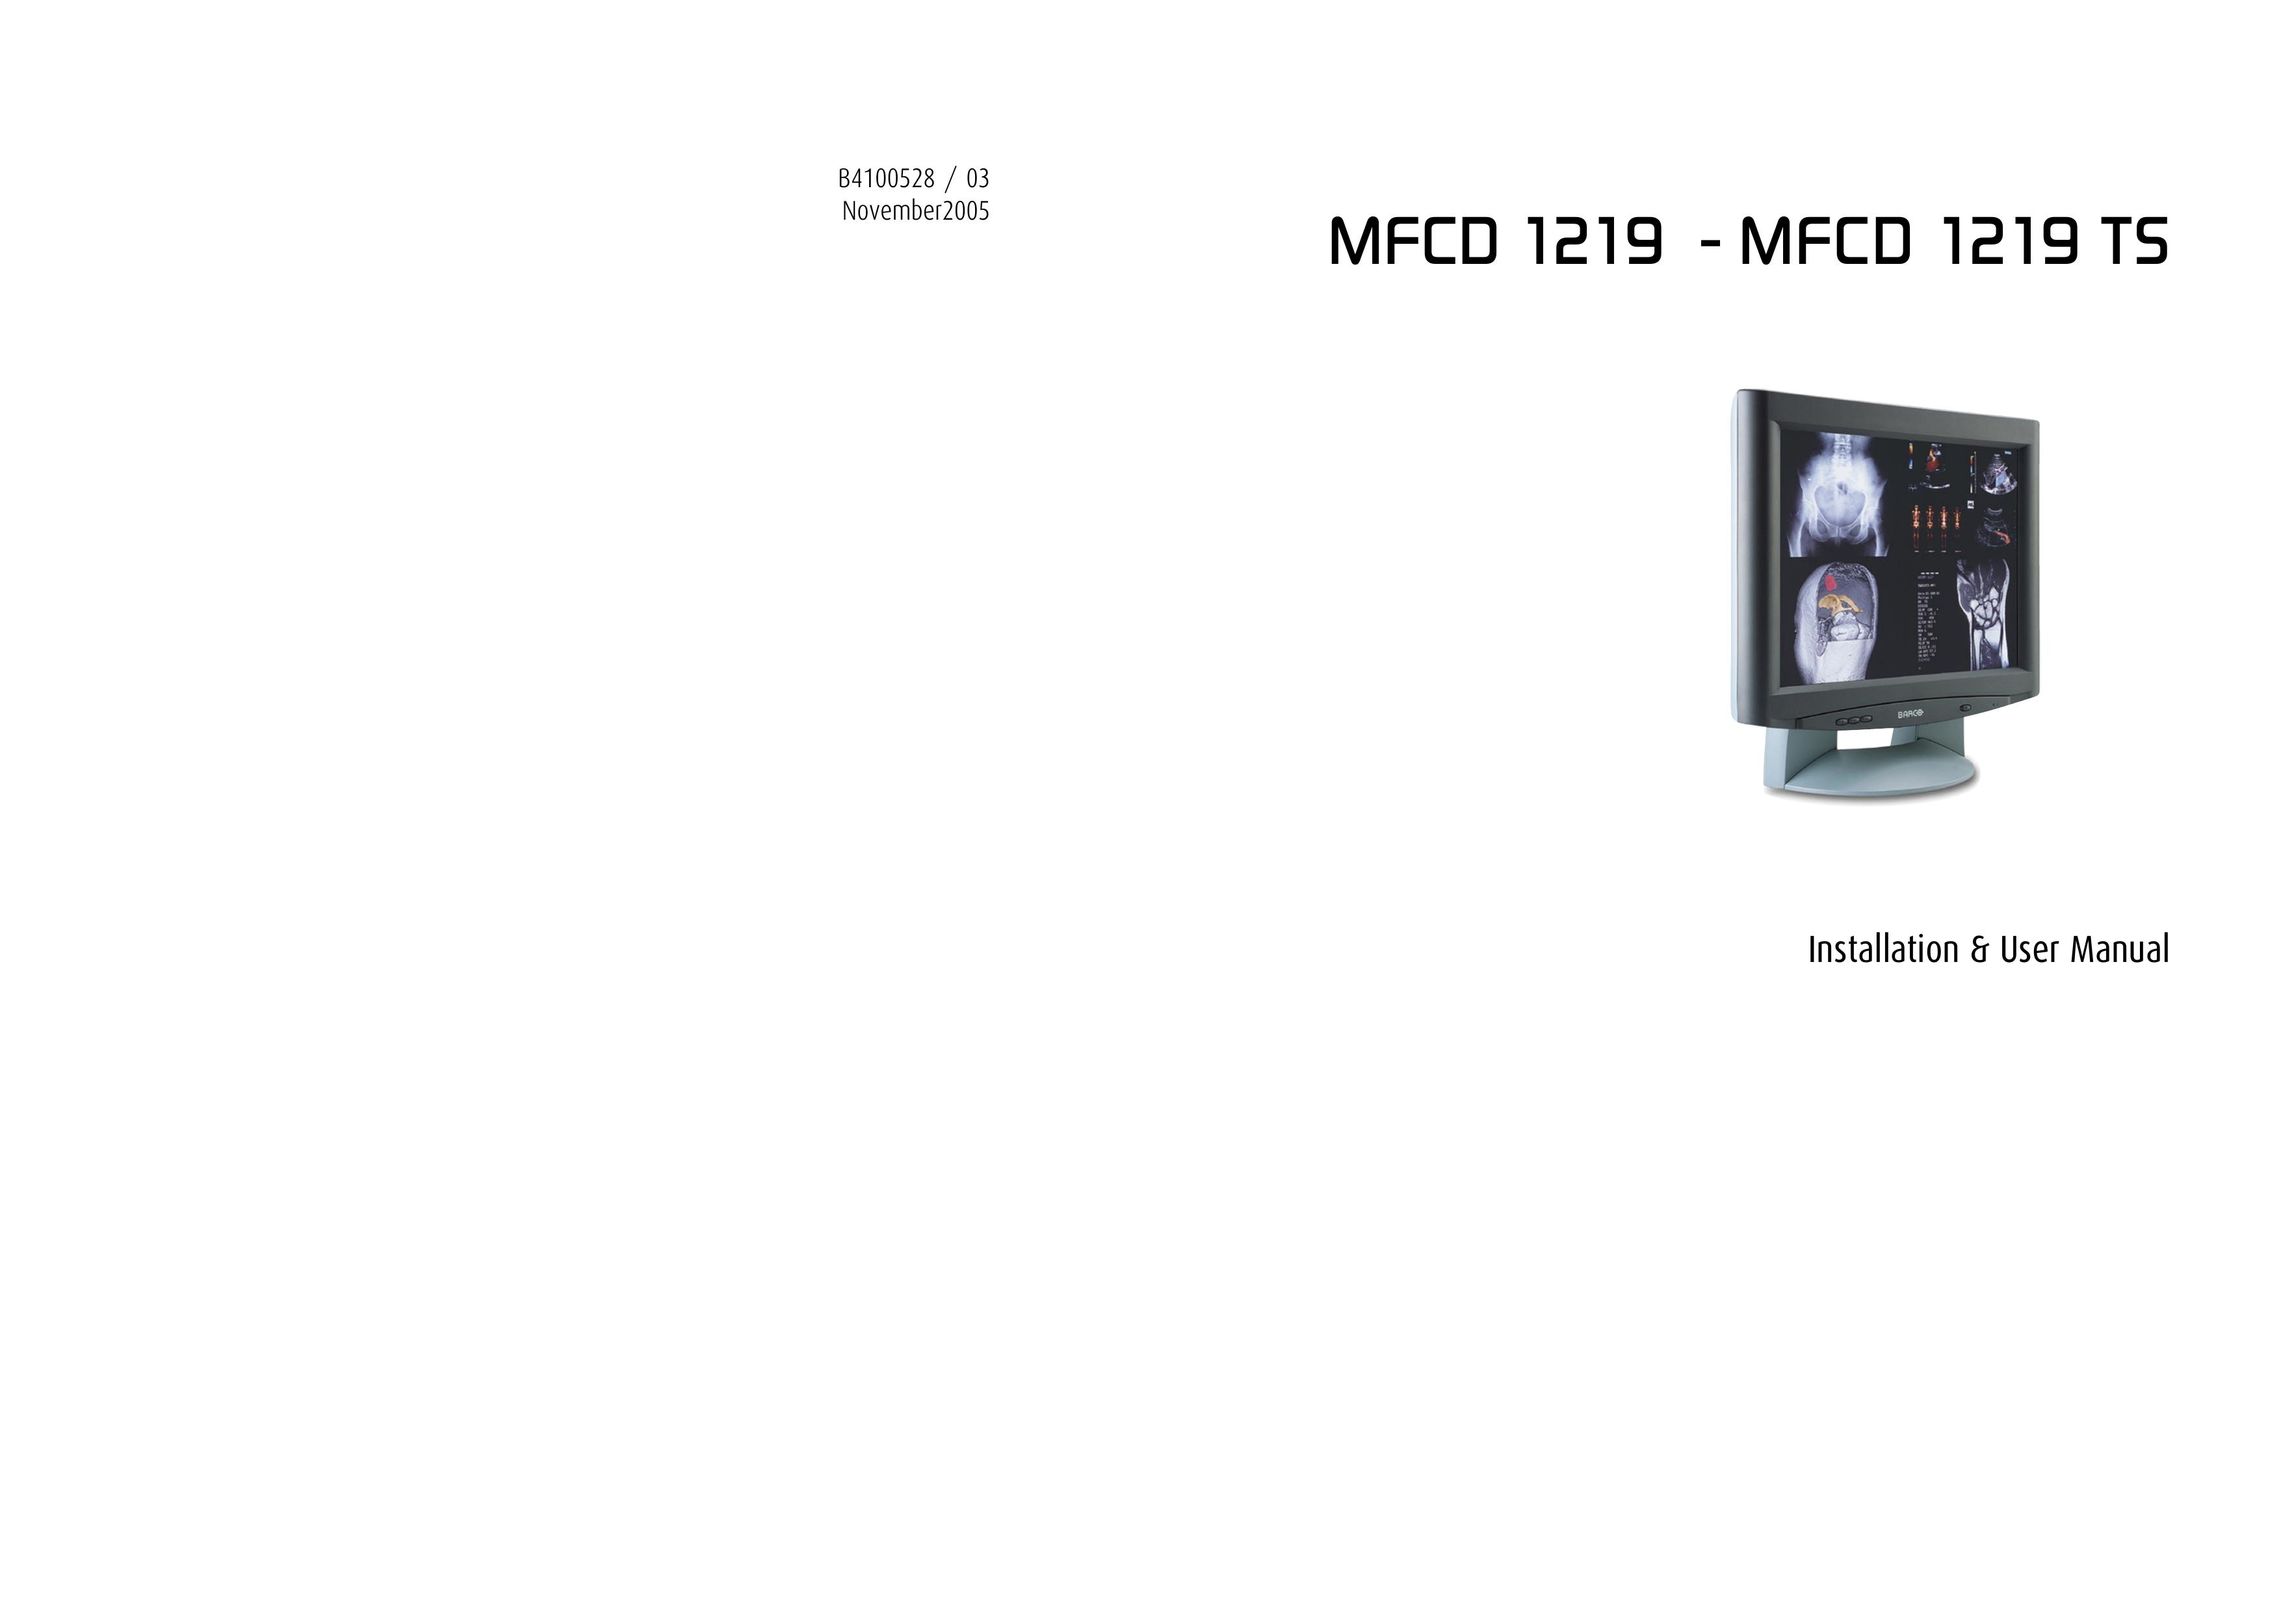 Barco MCFD 1219 - MCFD 1219 TS CRT Television User Manual